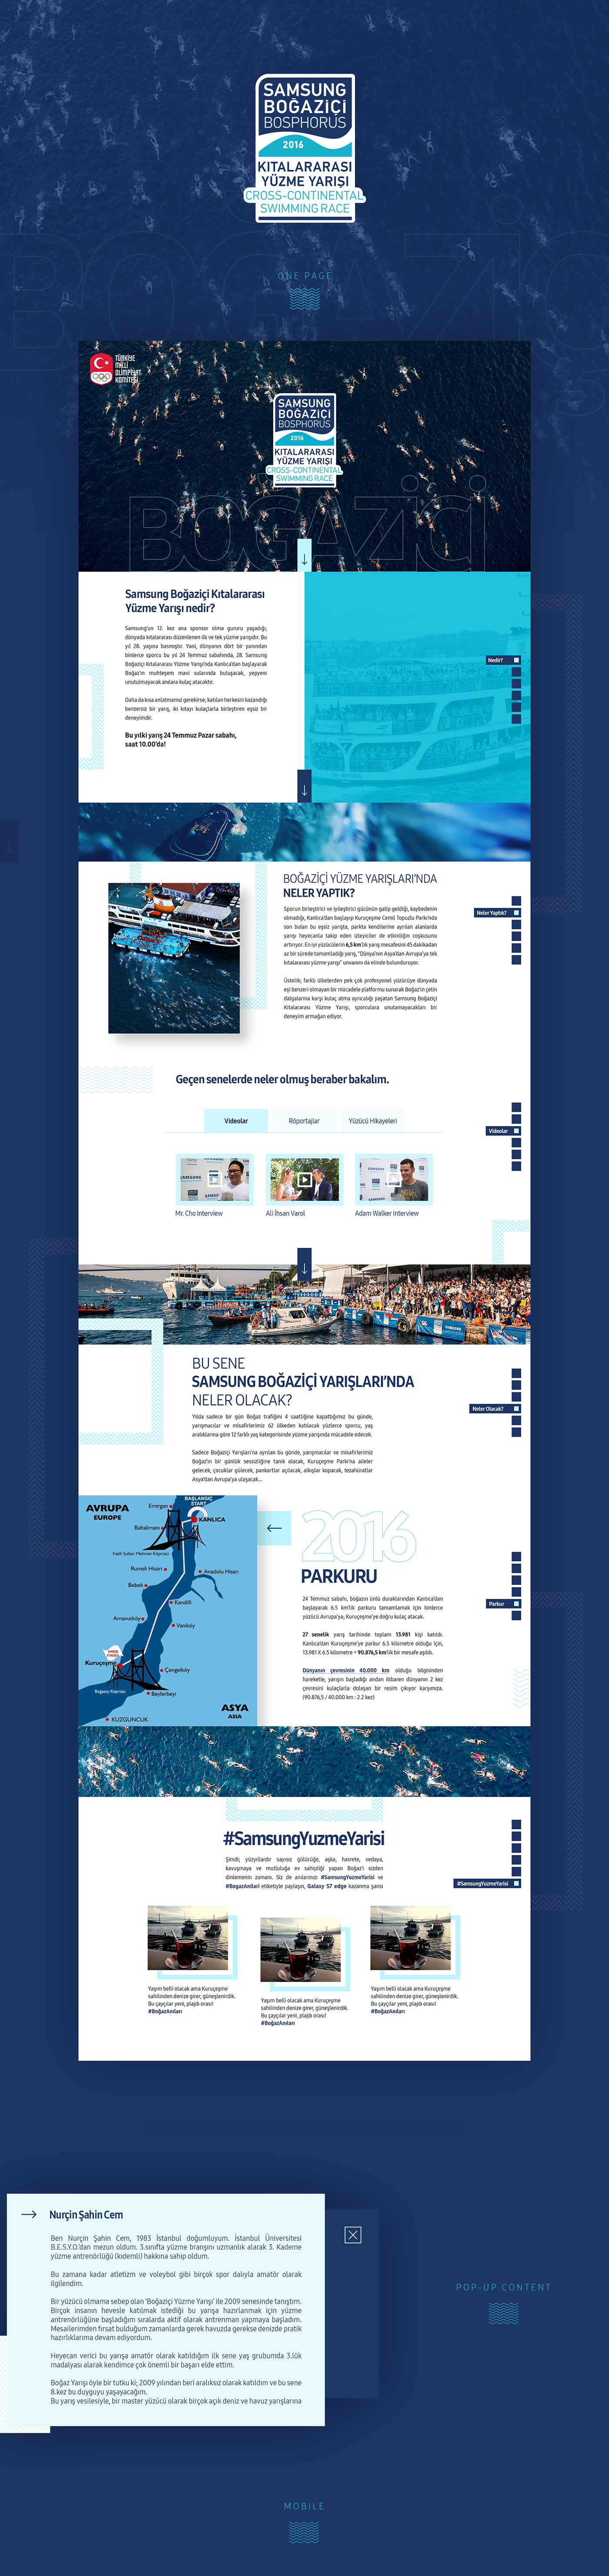 Samsung One Page web site bosphorus Samsung Bosphorus Cross-Continental swimming race